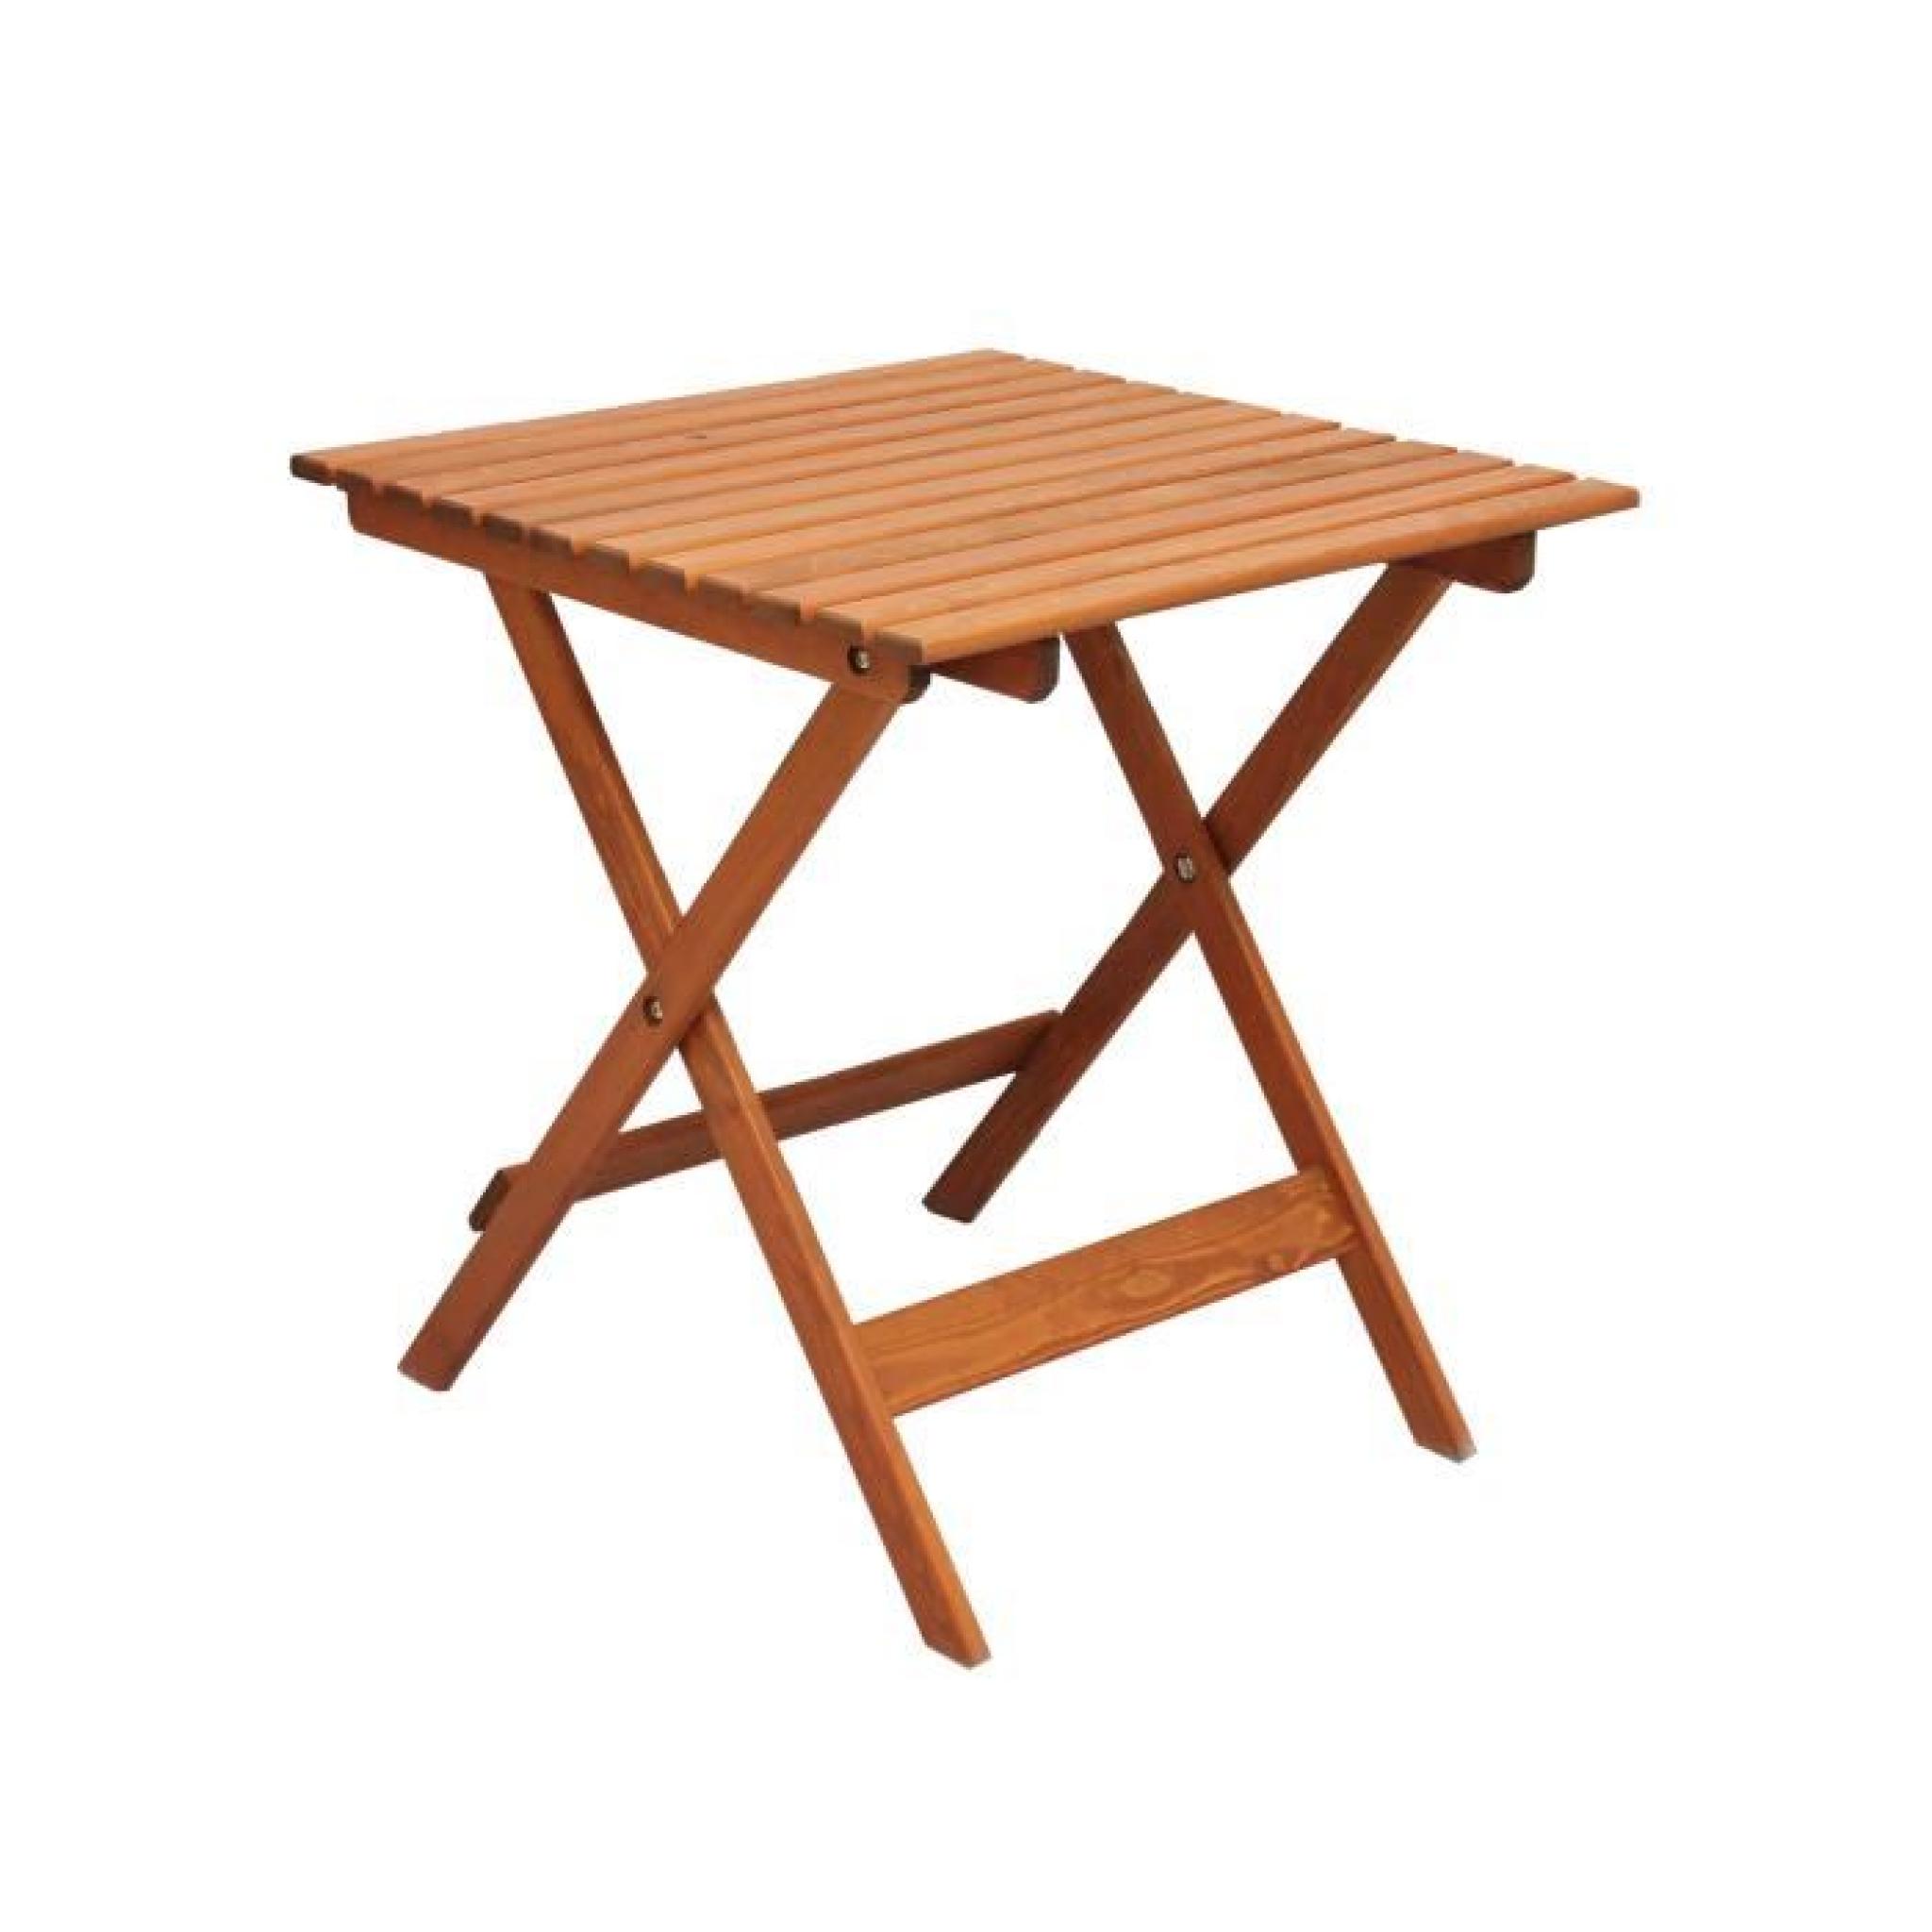 Table de Jardin ou terrasse LOTTA, rectangulair, pliable, en bois massif, ton marron